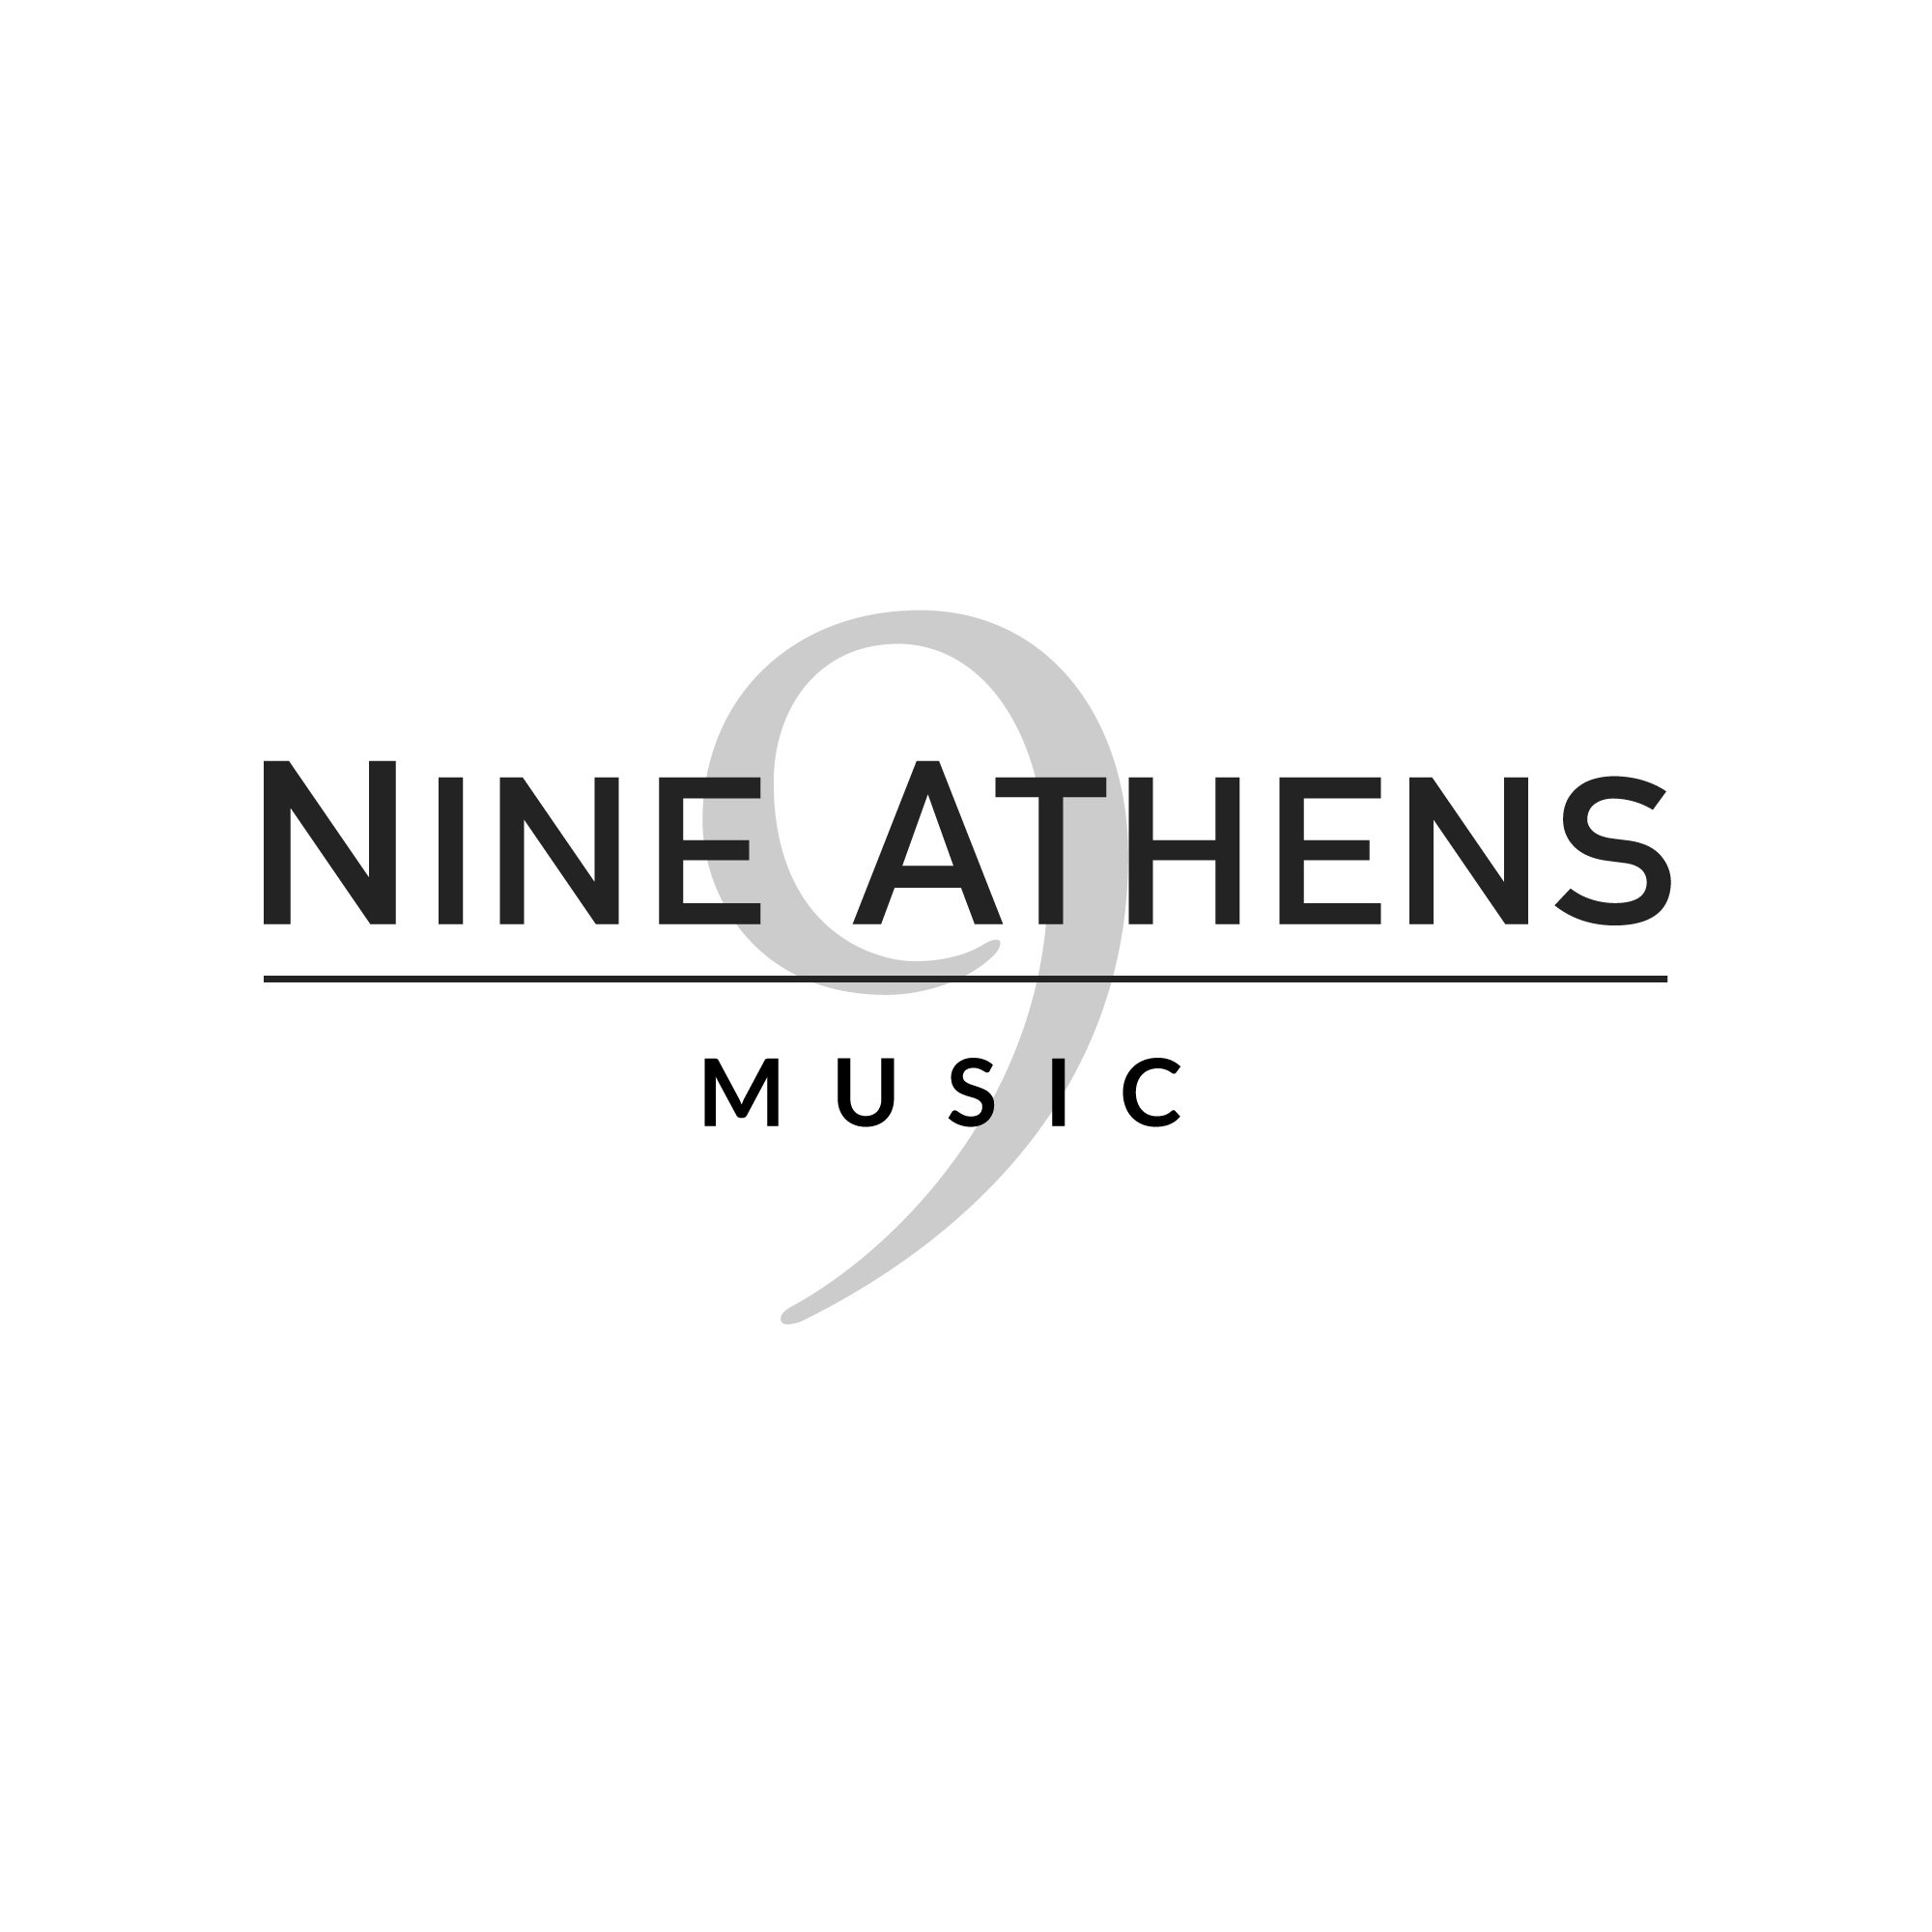 Nine+Athens+Music+logo+black.jpg